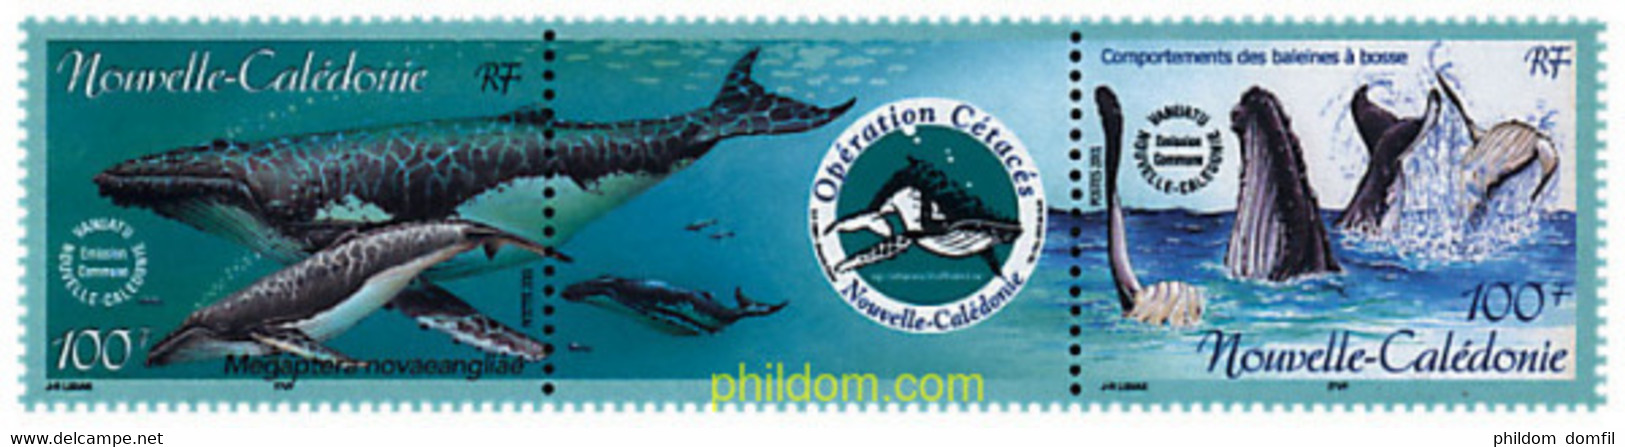 5405 MNH NUEVA CALEDONIA 2001 OPERACION CETACEOS - Oblitérés